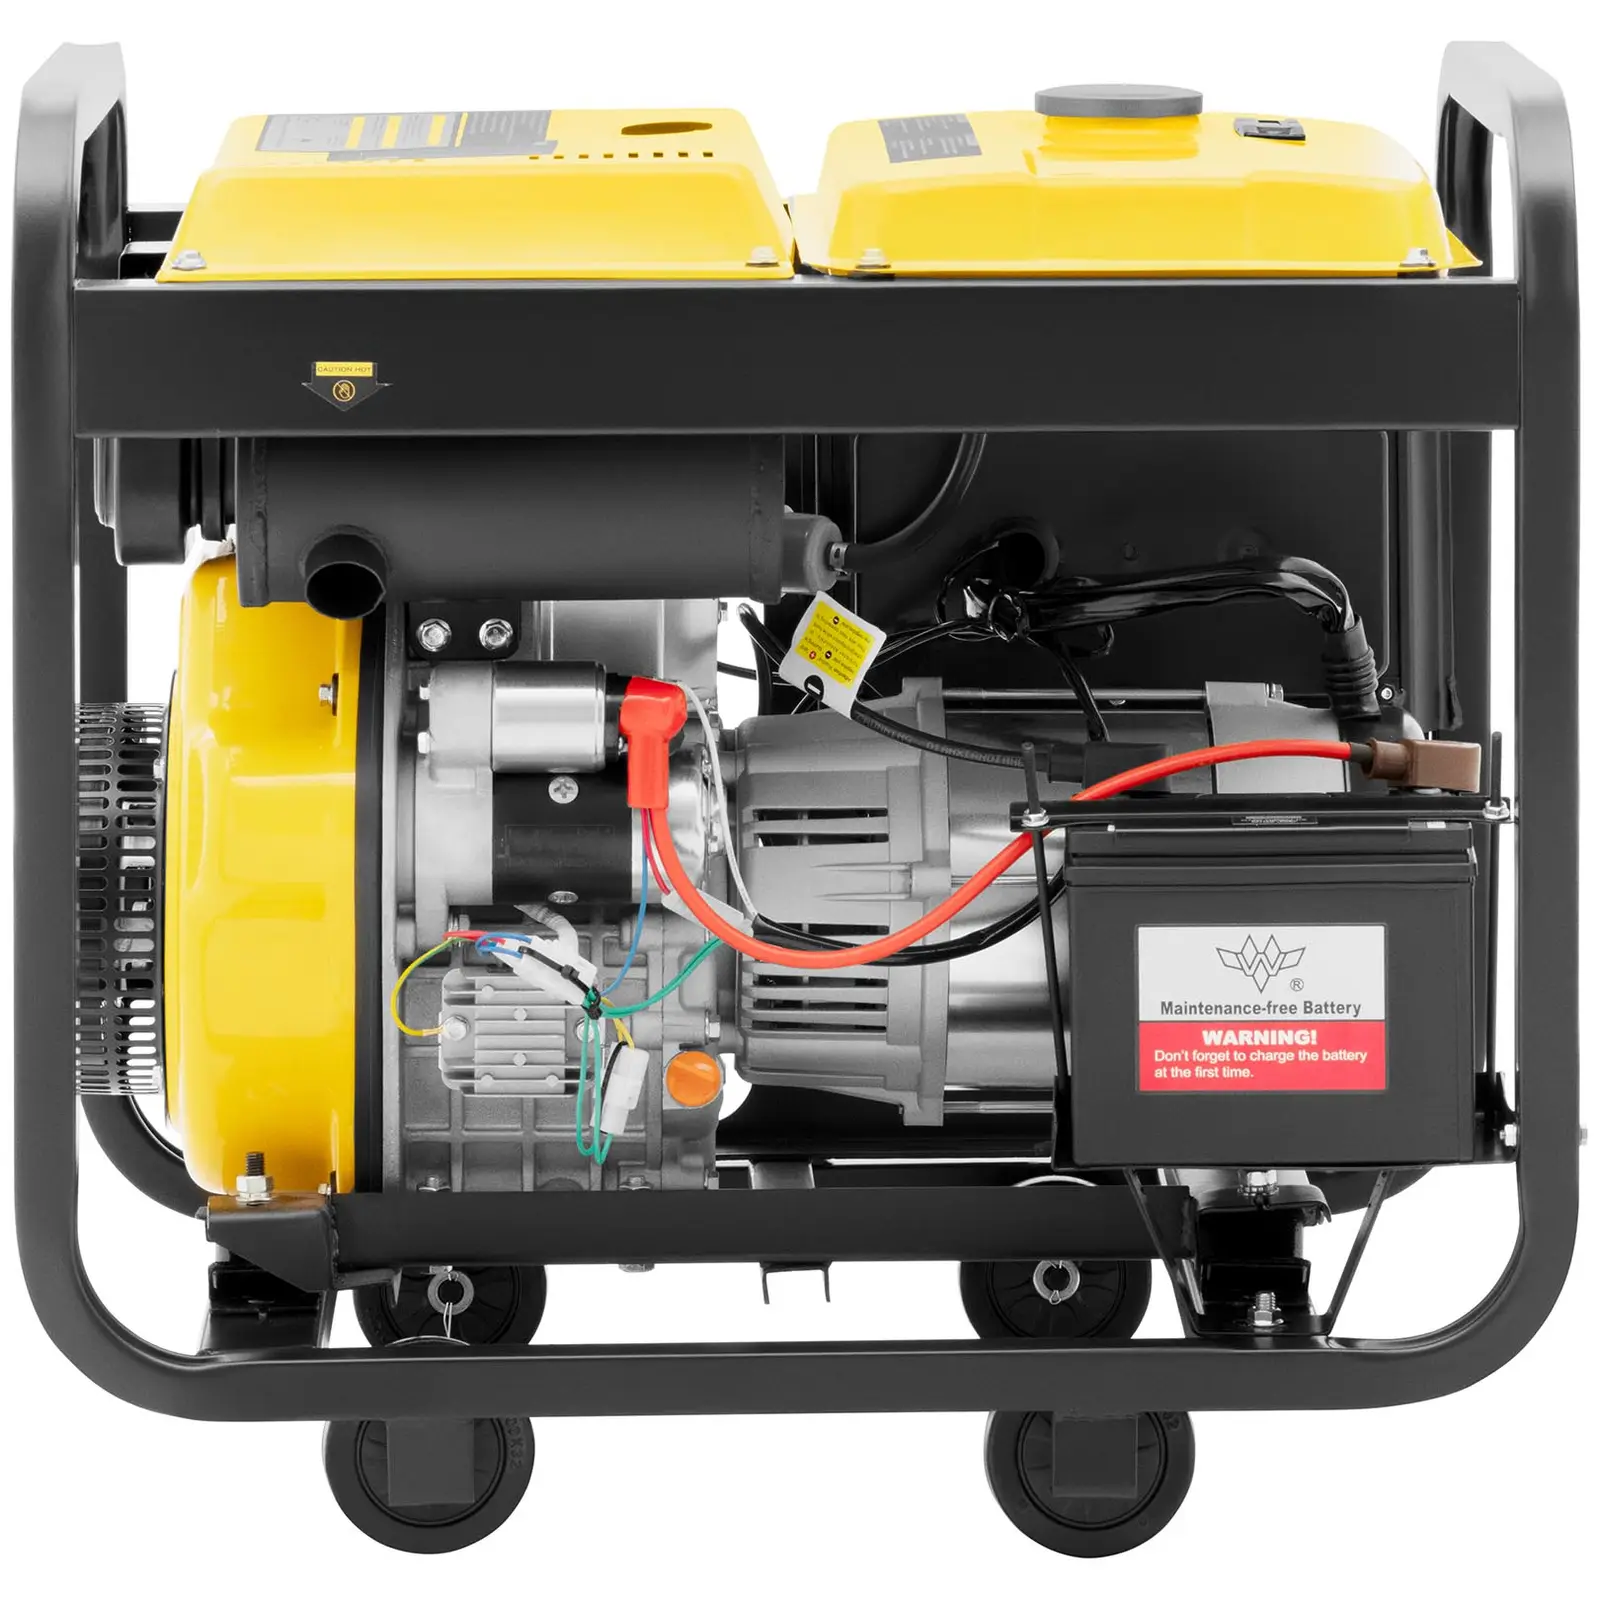 Outlet Agregat prądotwórczy Diesel - 1830 / 5500 W - 12,5 l - 240/400 V - mobilny - AVR - Euro 5